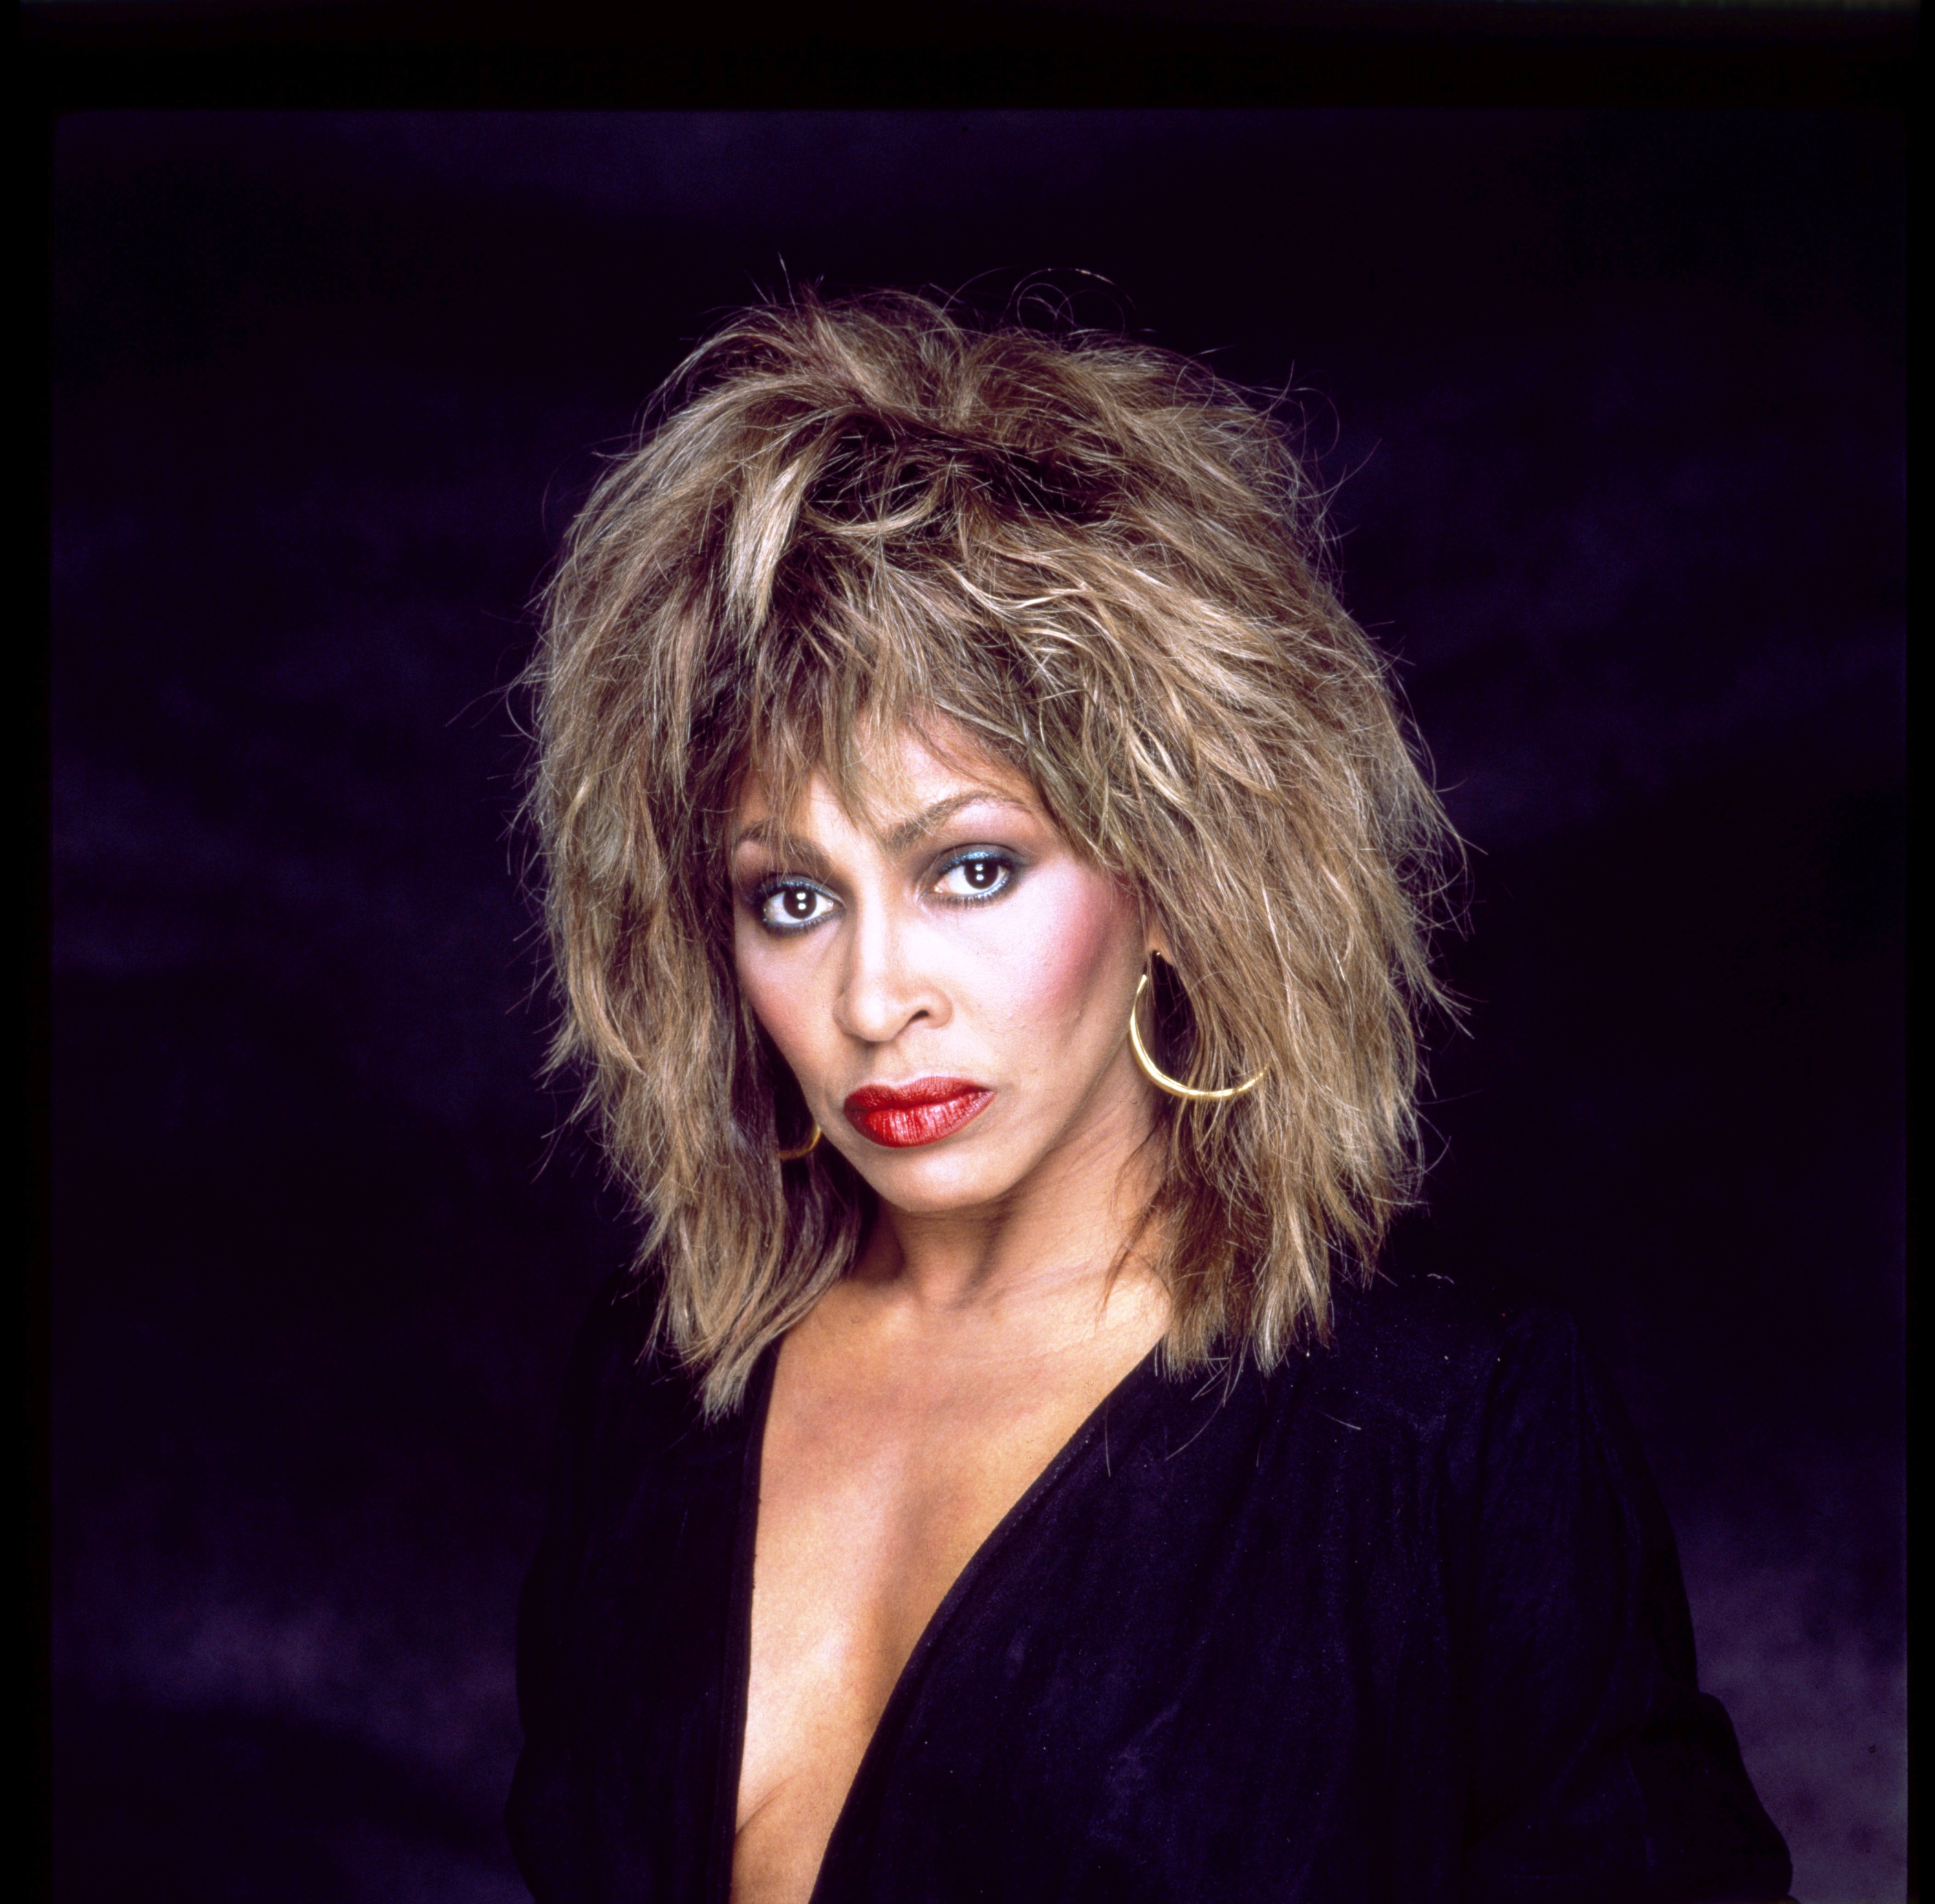 Tina Turner photo gallery - high quality pics of Tina Turner | ThePlace